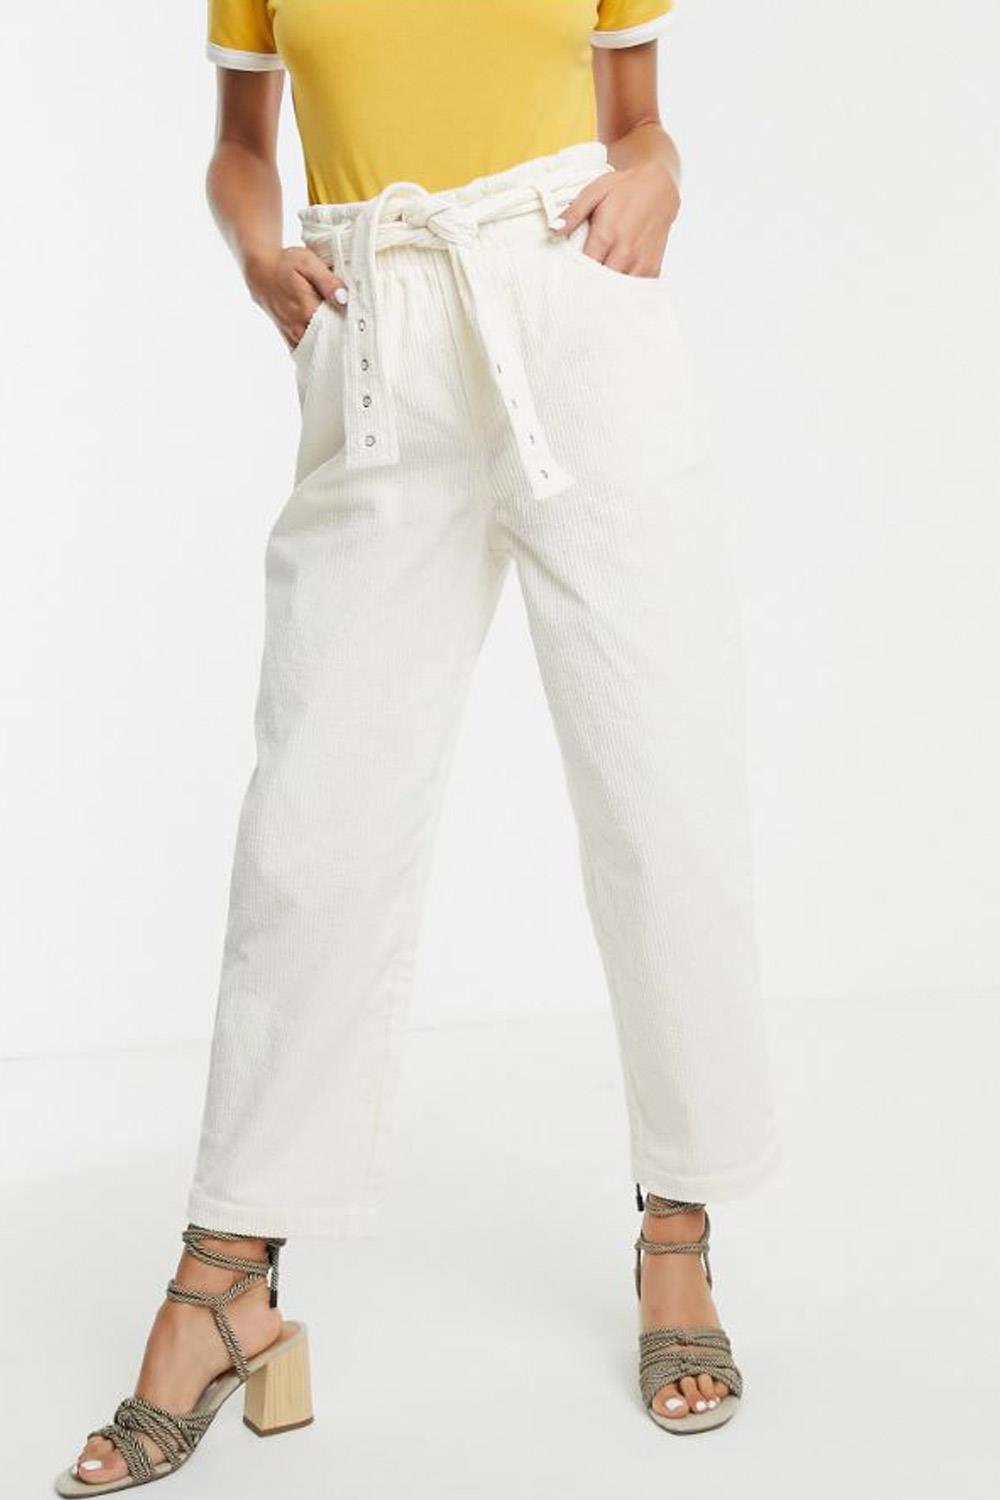 pantalones diario Moon River, 105,99€